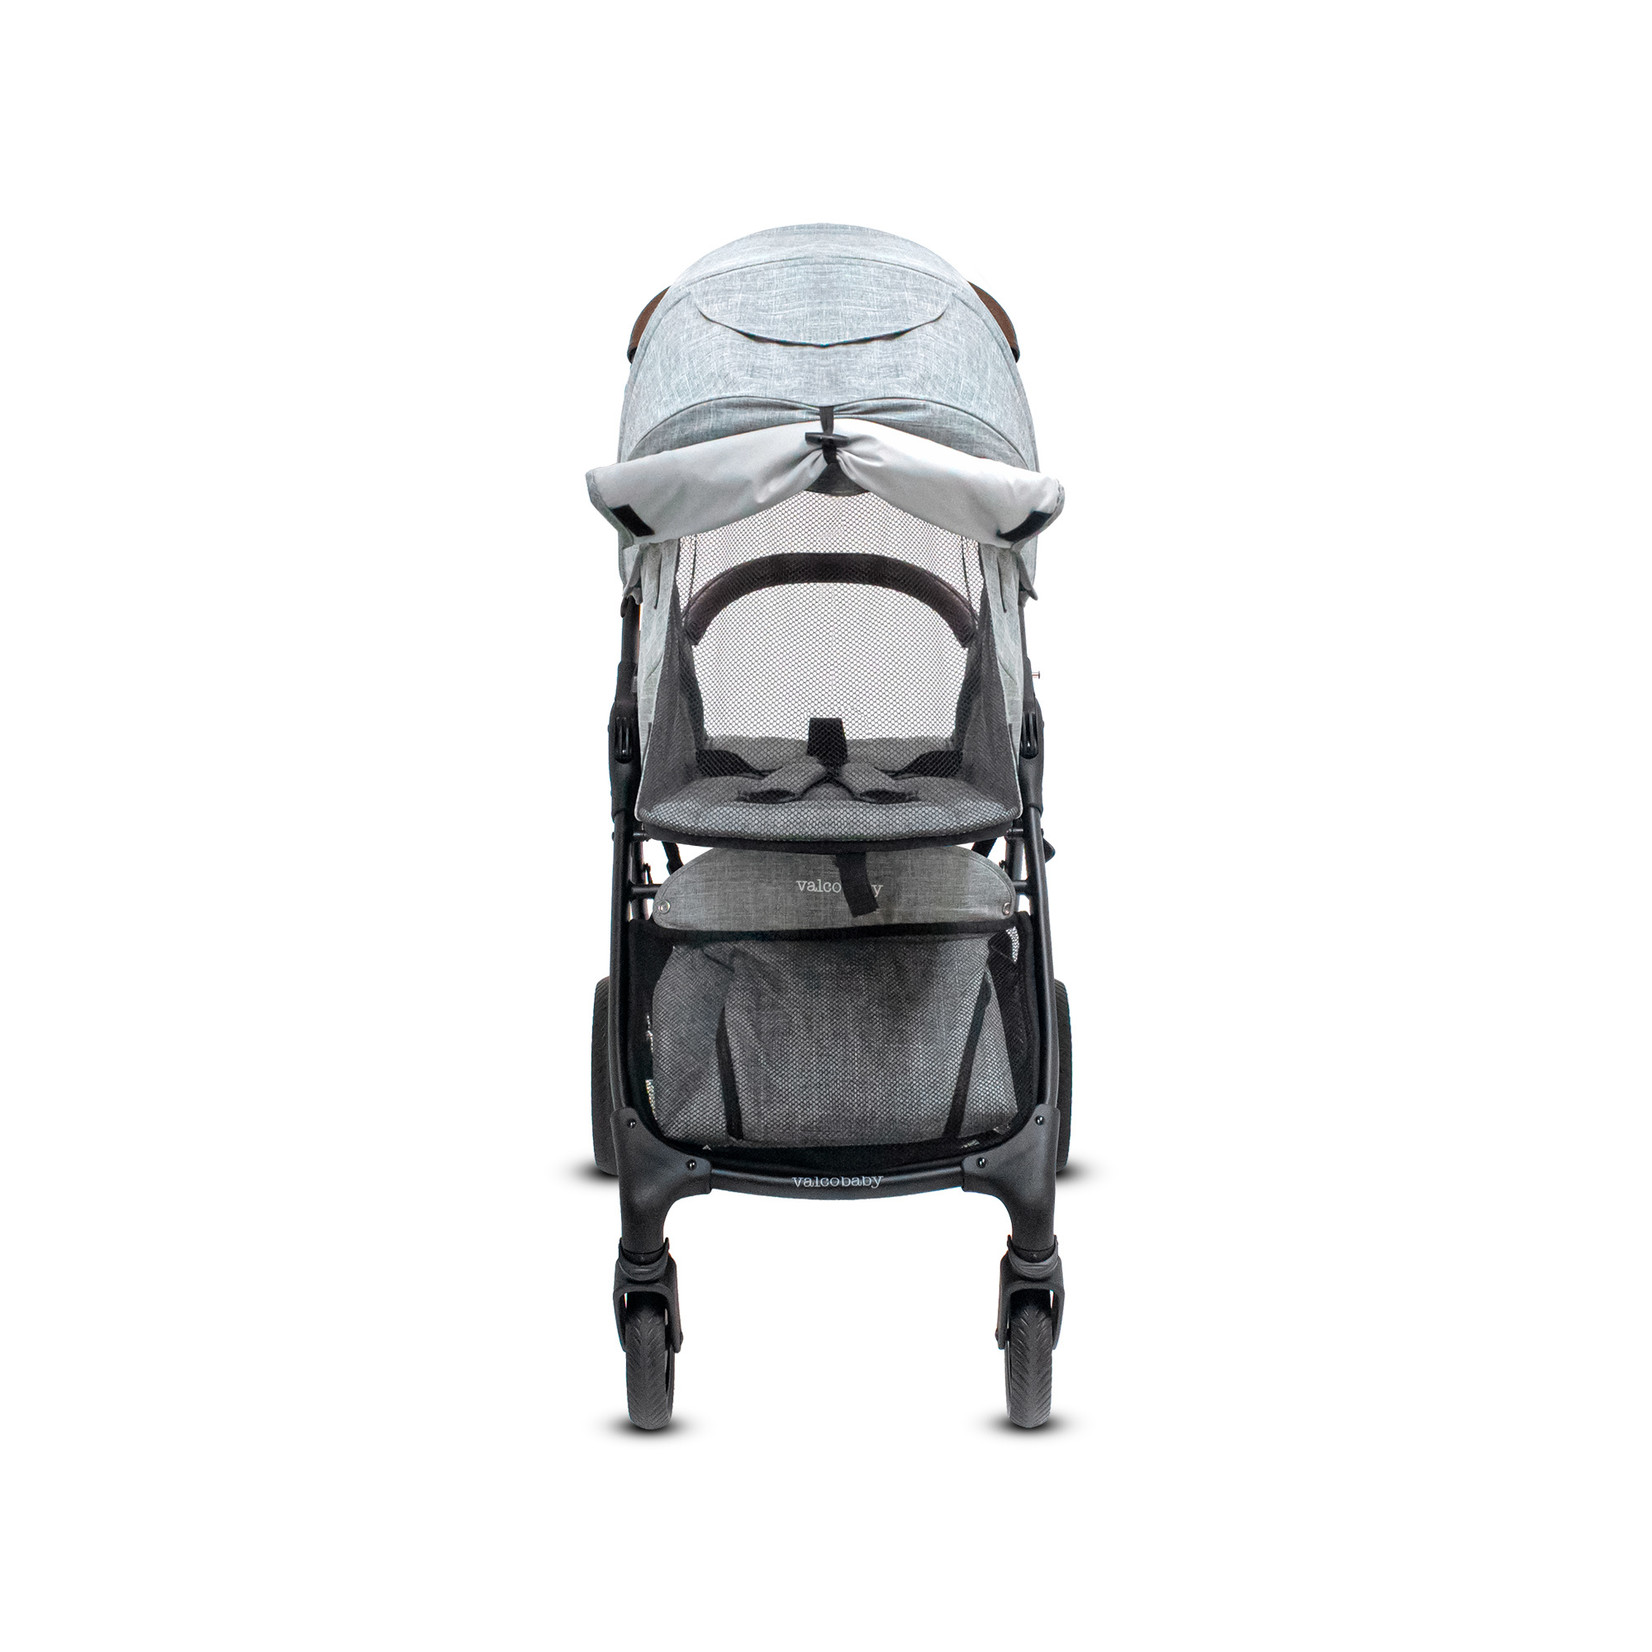 Valco Baby Trend Ultra-Grey+ Bonus Gift Total Value $74.9